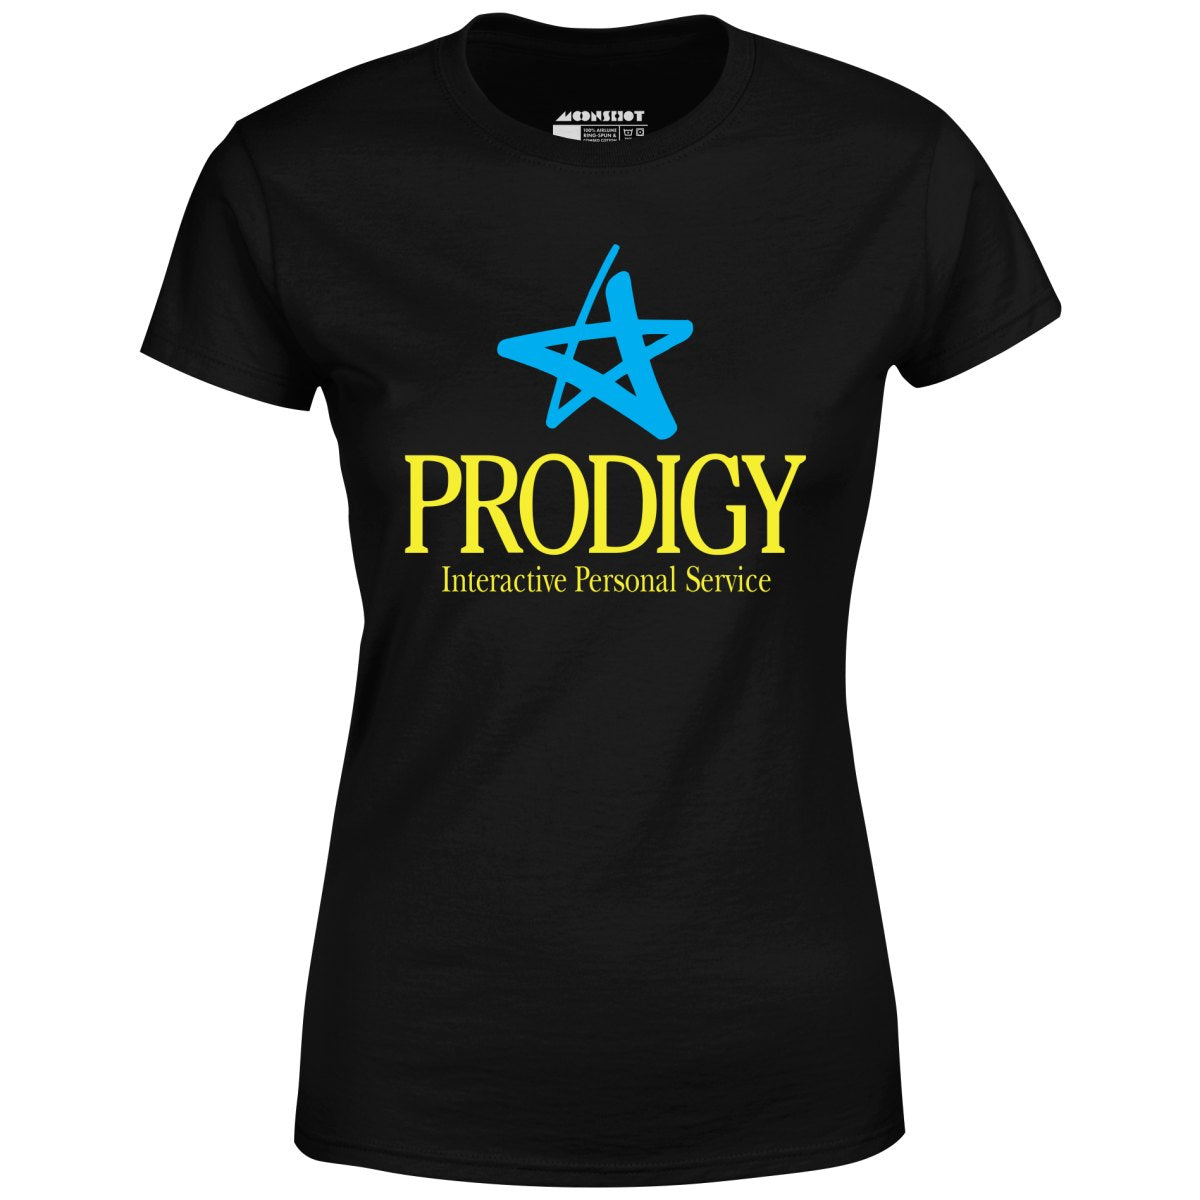 Prodigy - Vintage Internet - Women's T-Shirt